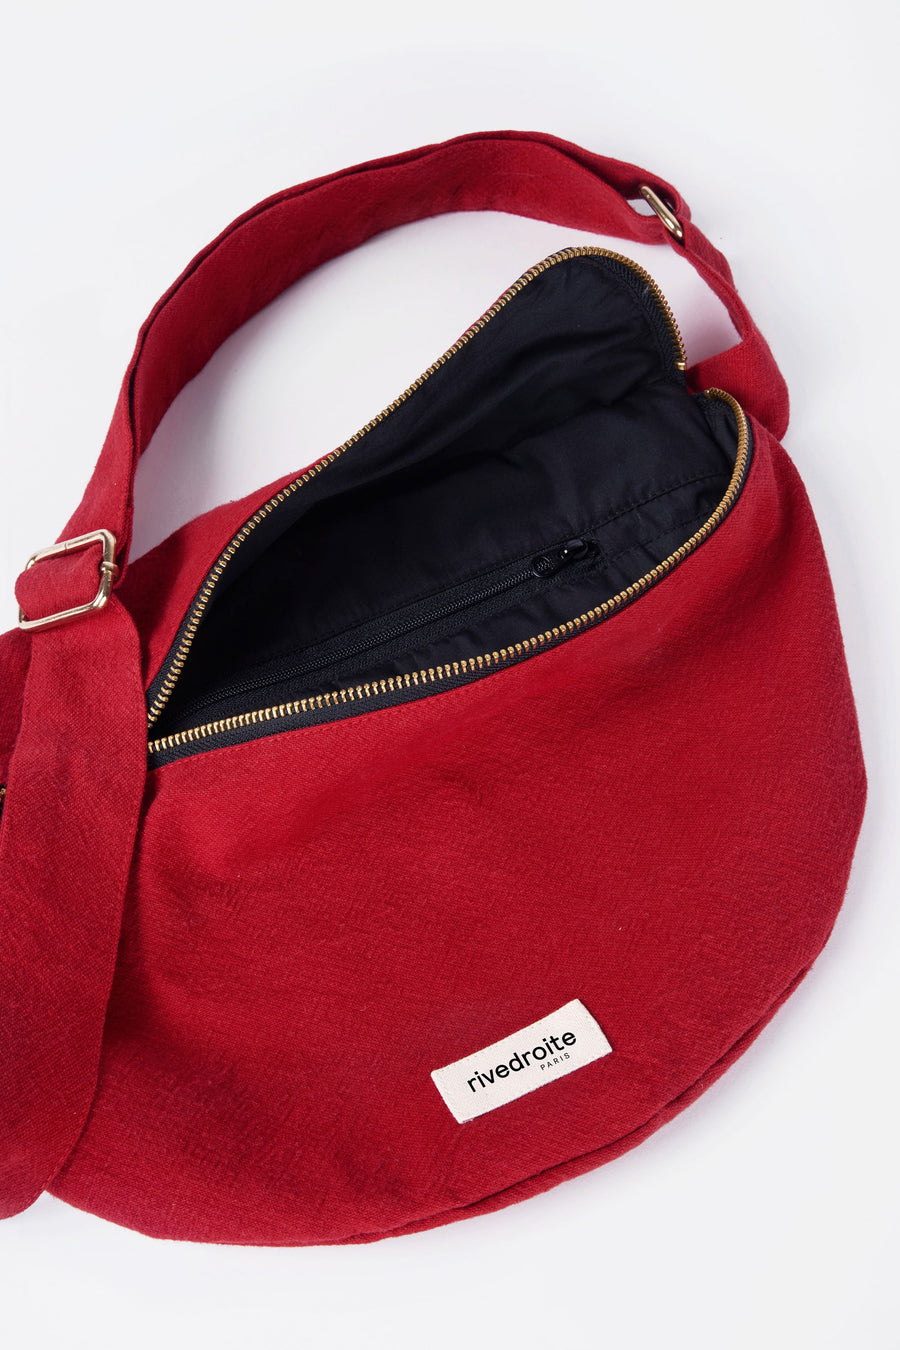 Rivedroite Custine XL The Waist Bag - Vibrant Red